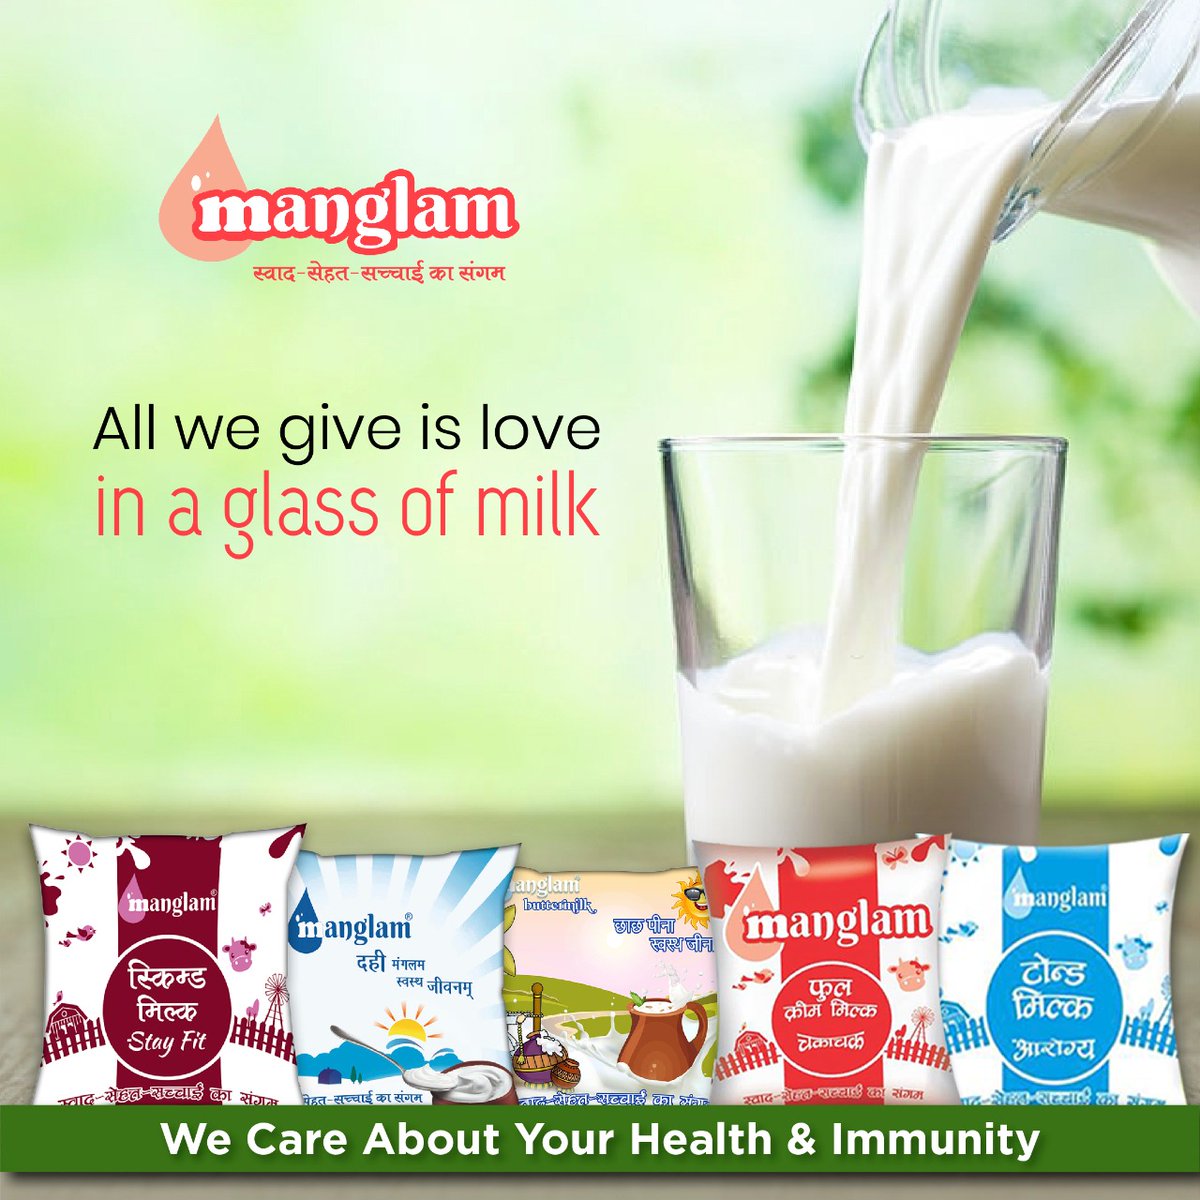 Milk is the best source of #calcium for all age groups for #healthy  #growth. हर दिन का काम करदे आसन, #ManglamMilk पहुंचा है आपके द्वार।

#ManglamMilk #MilkBenefits #Milk #StayHealthy #DrinkMilk #DairyProducts #GlassOfMilk #MilkOfIndia #MilkCalcium #HealthyLiving  #Immunity